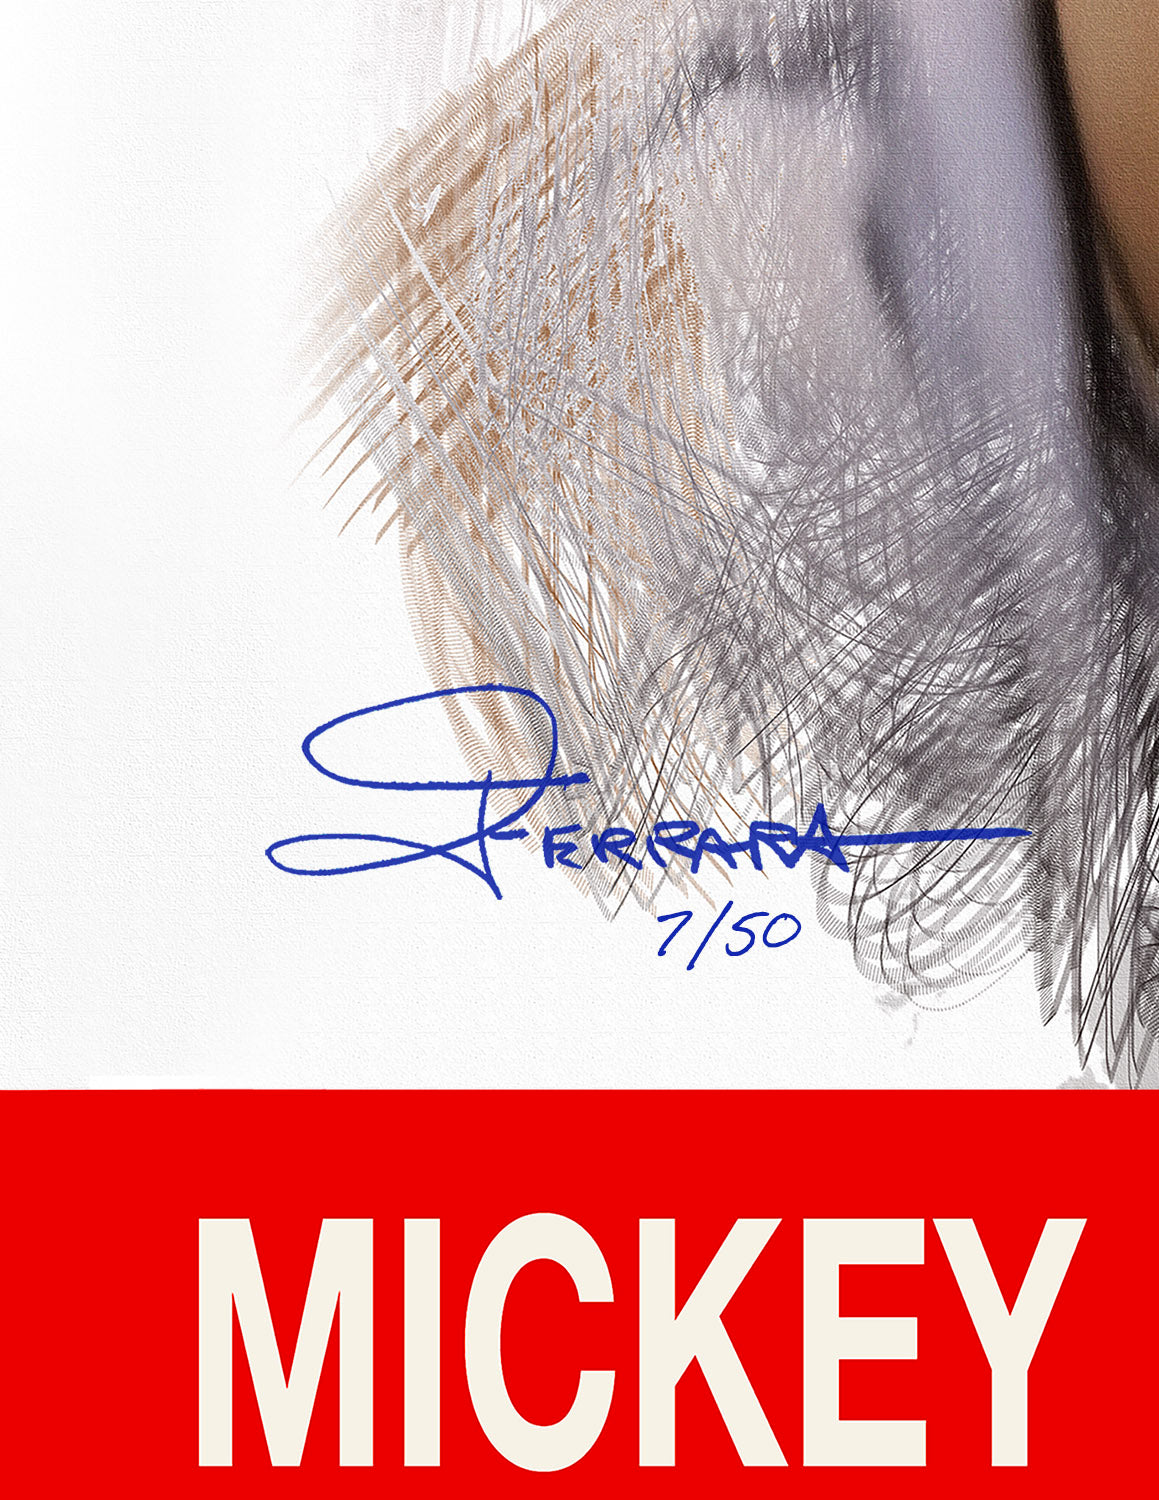 Mickey Mantle - Rookie Season